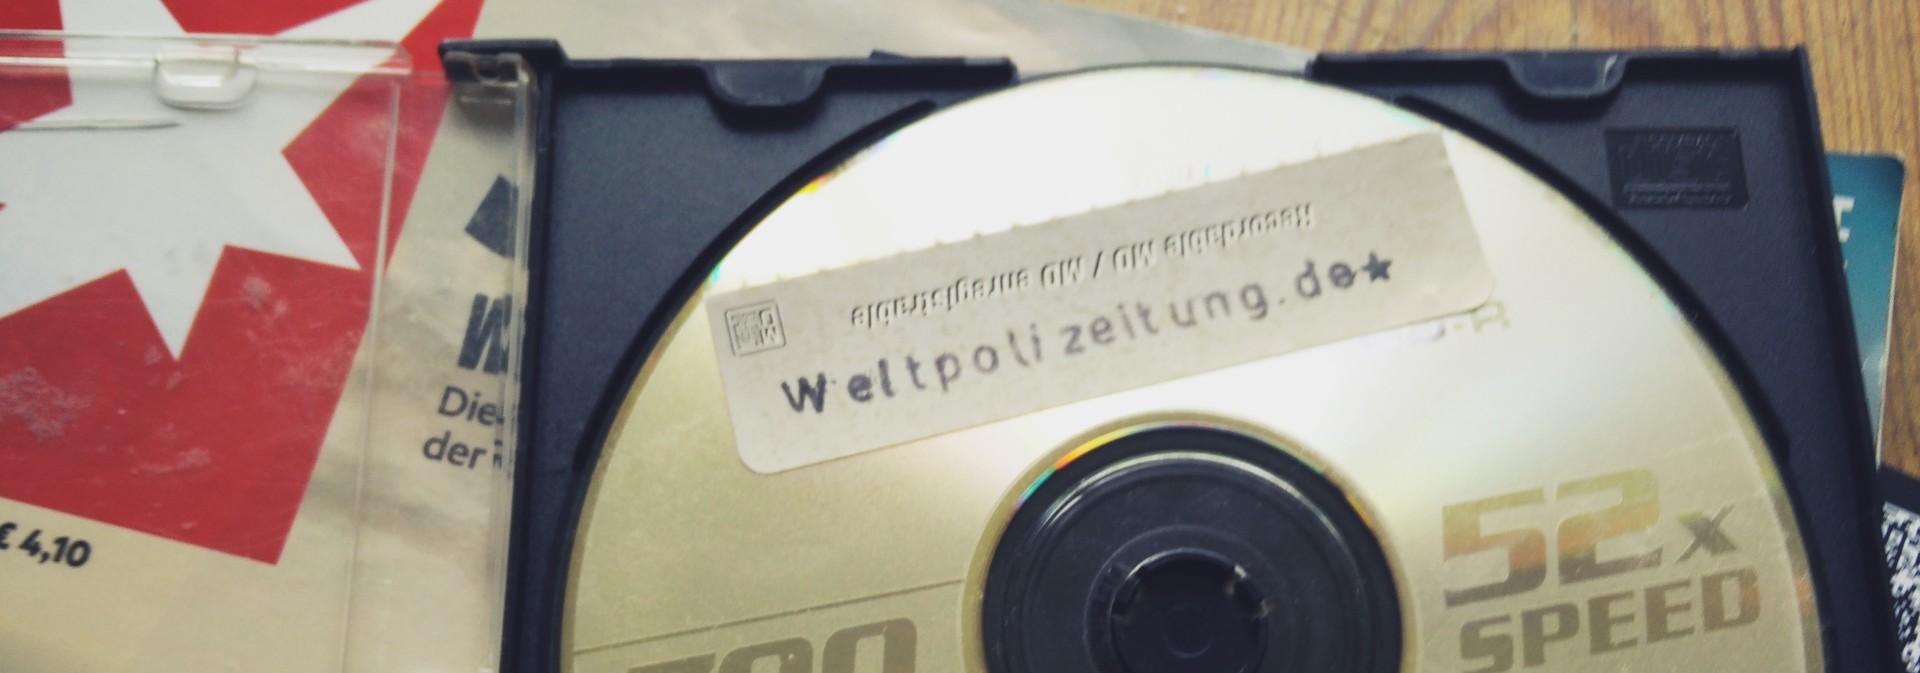 Die original Audio-CD "weltpolizeitung.de"